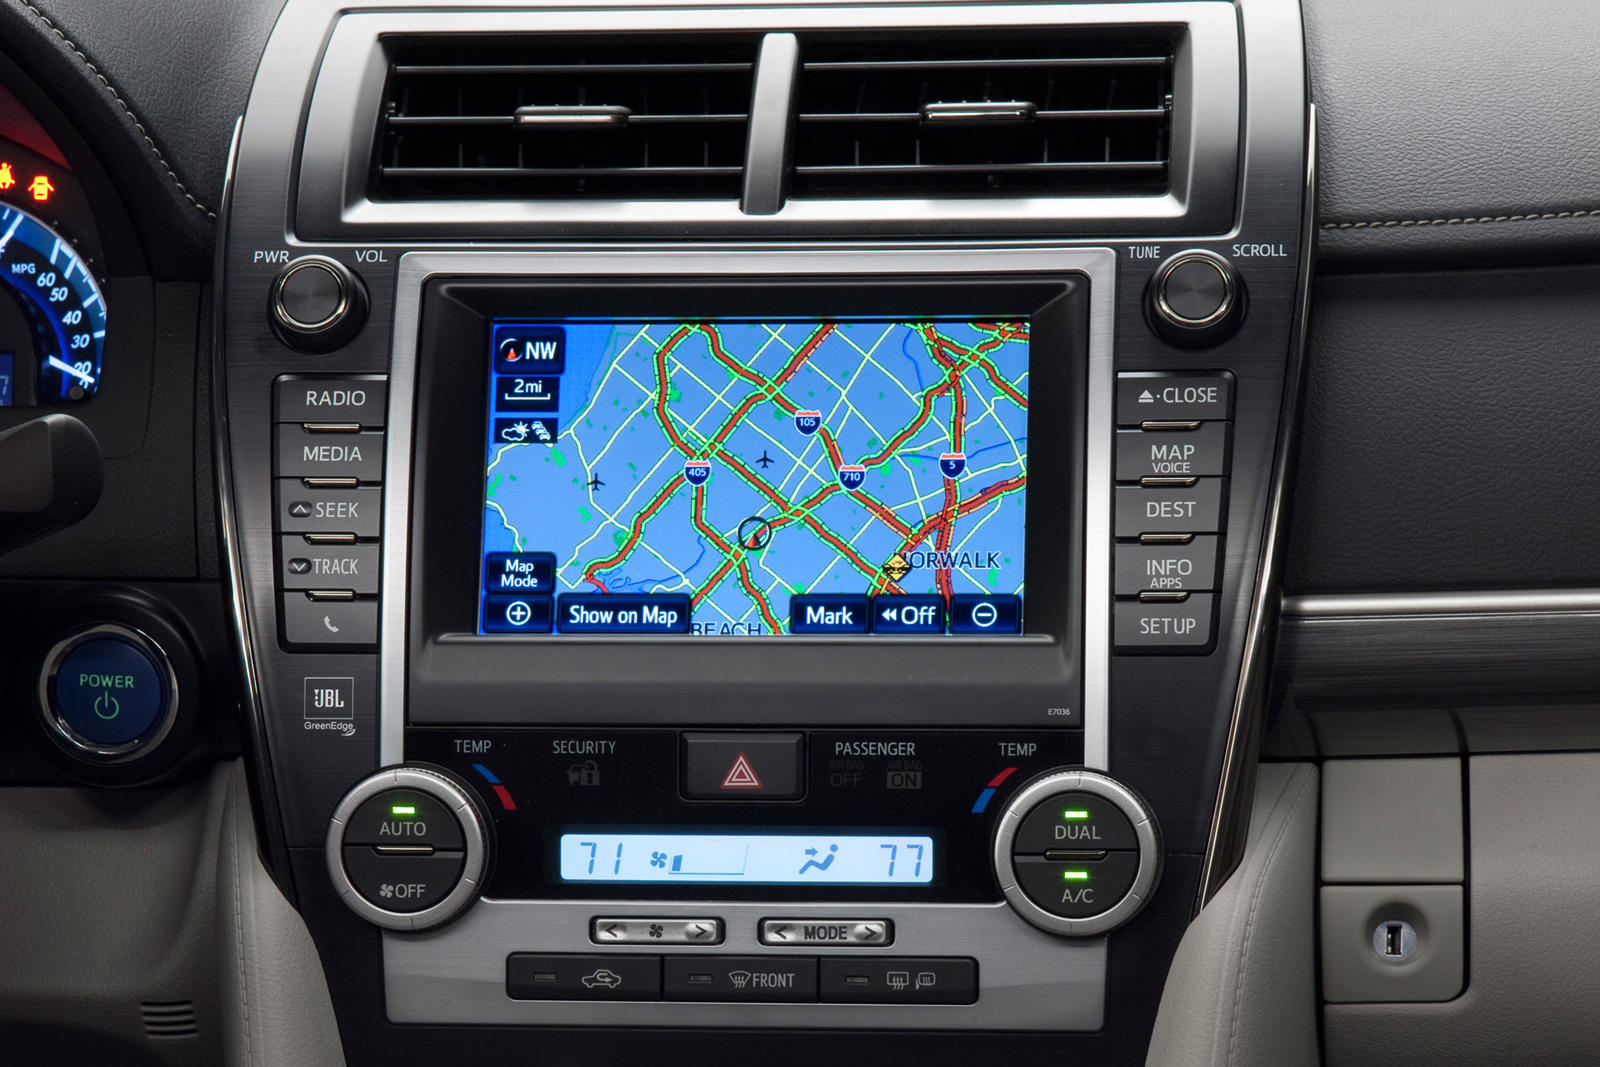 2013 Toyota Camry Hybrid Central Console Navigation System